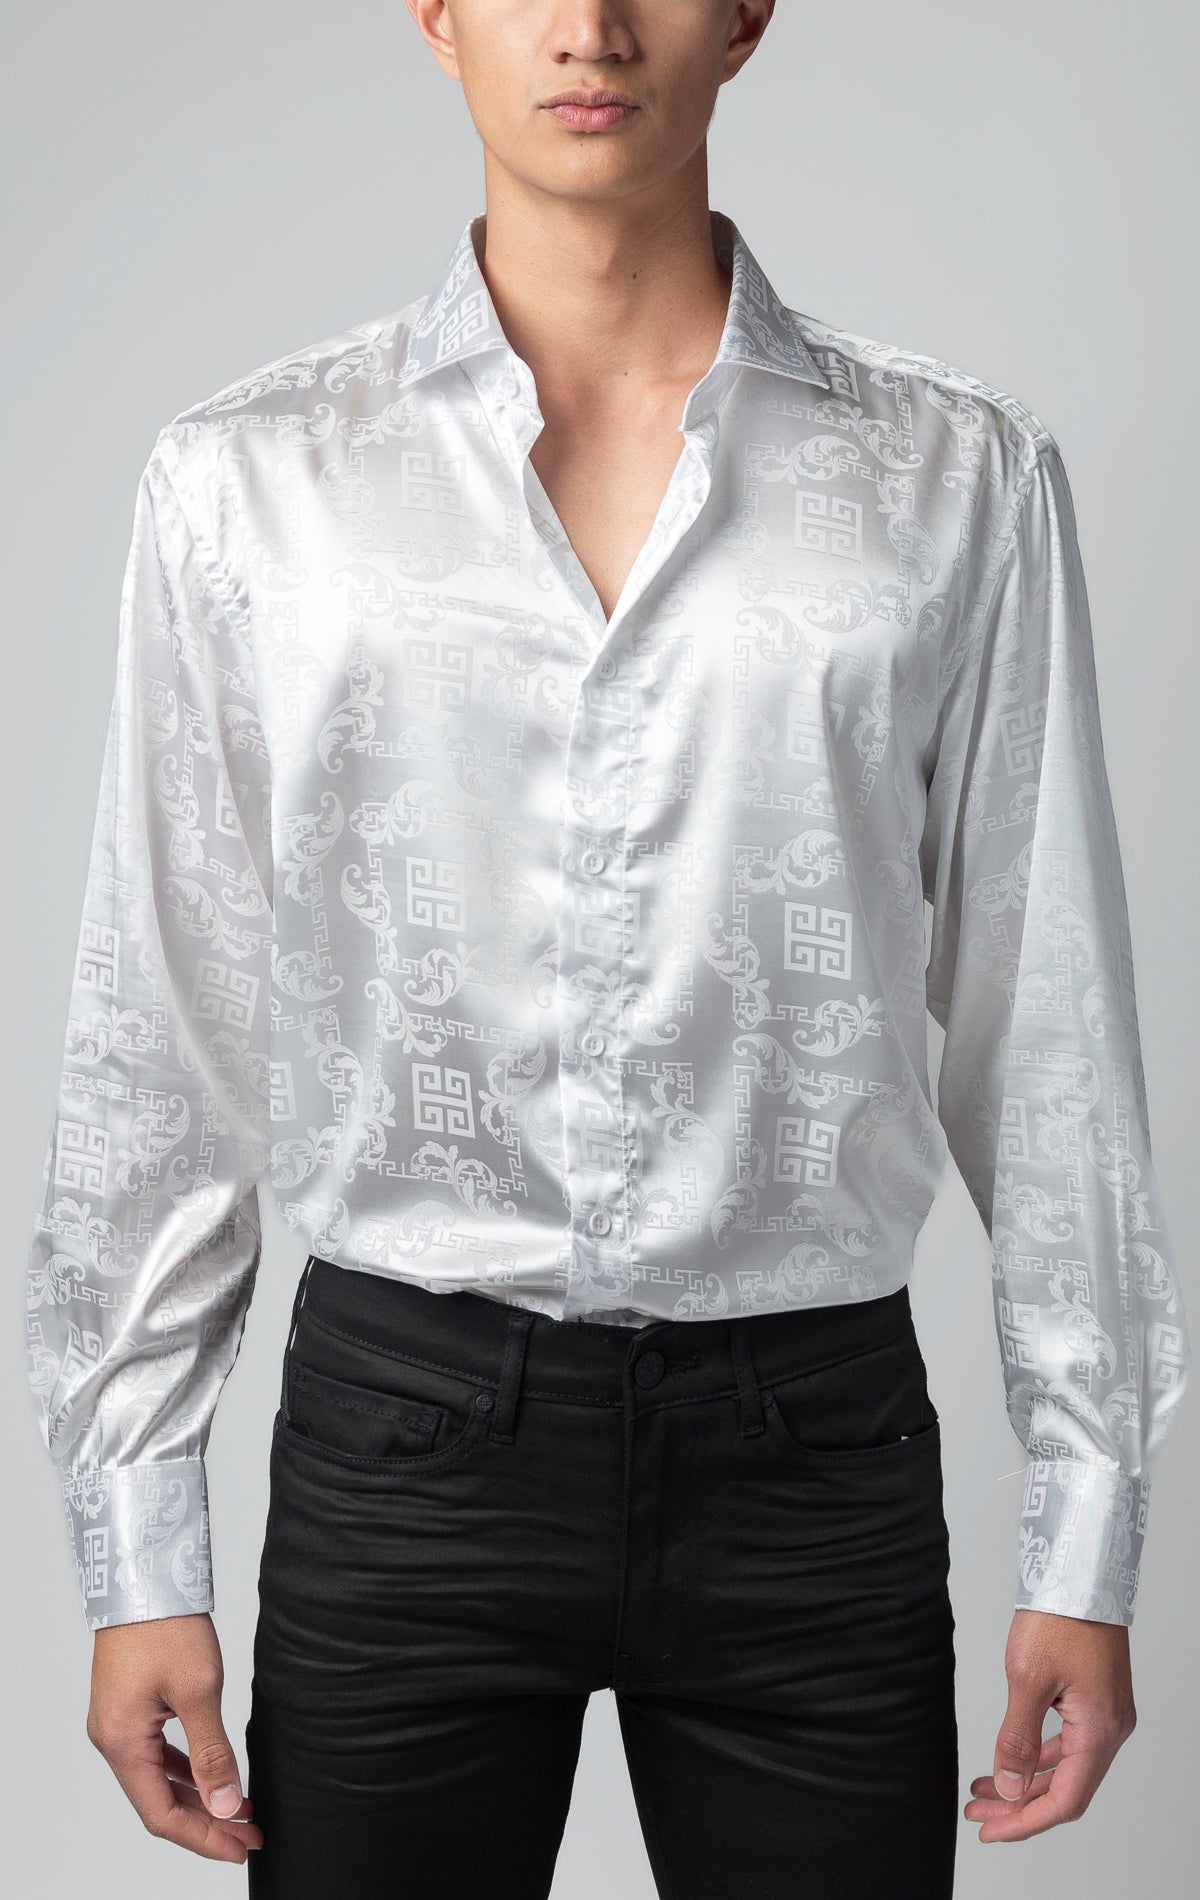 Greek key long sleeve dress shirt with white shine.